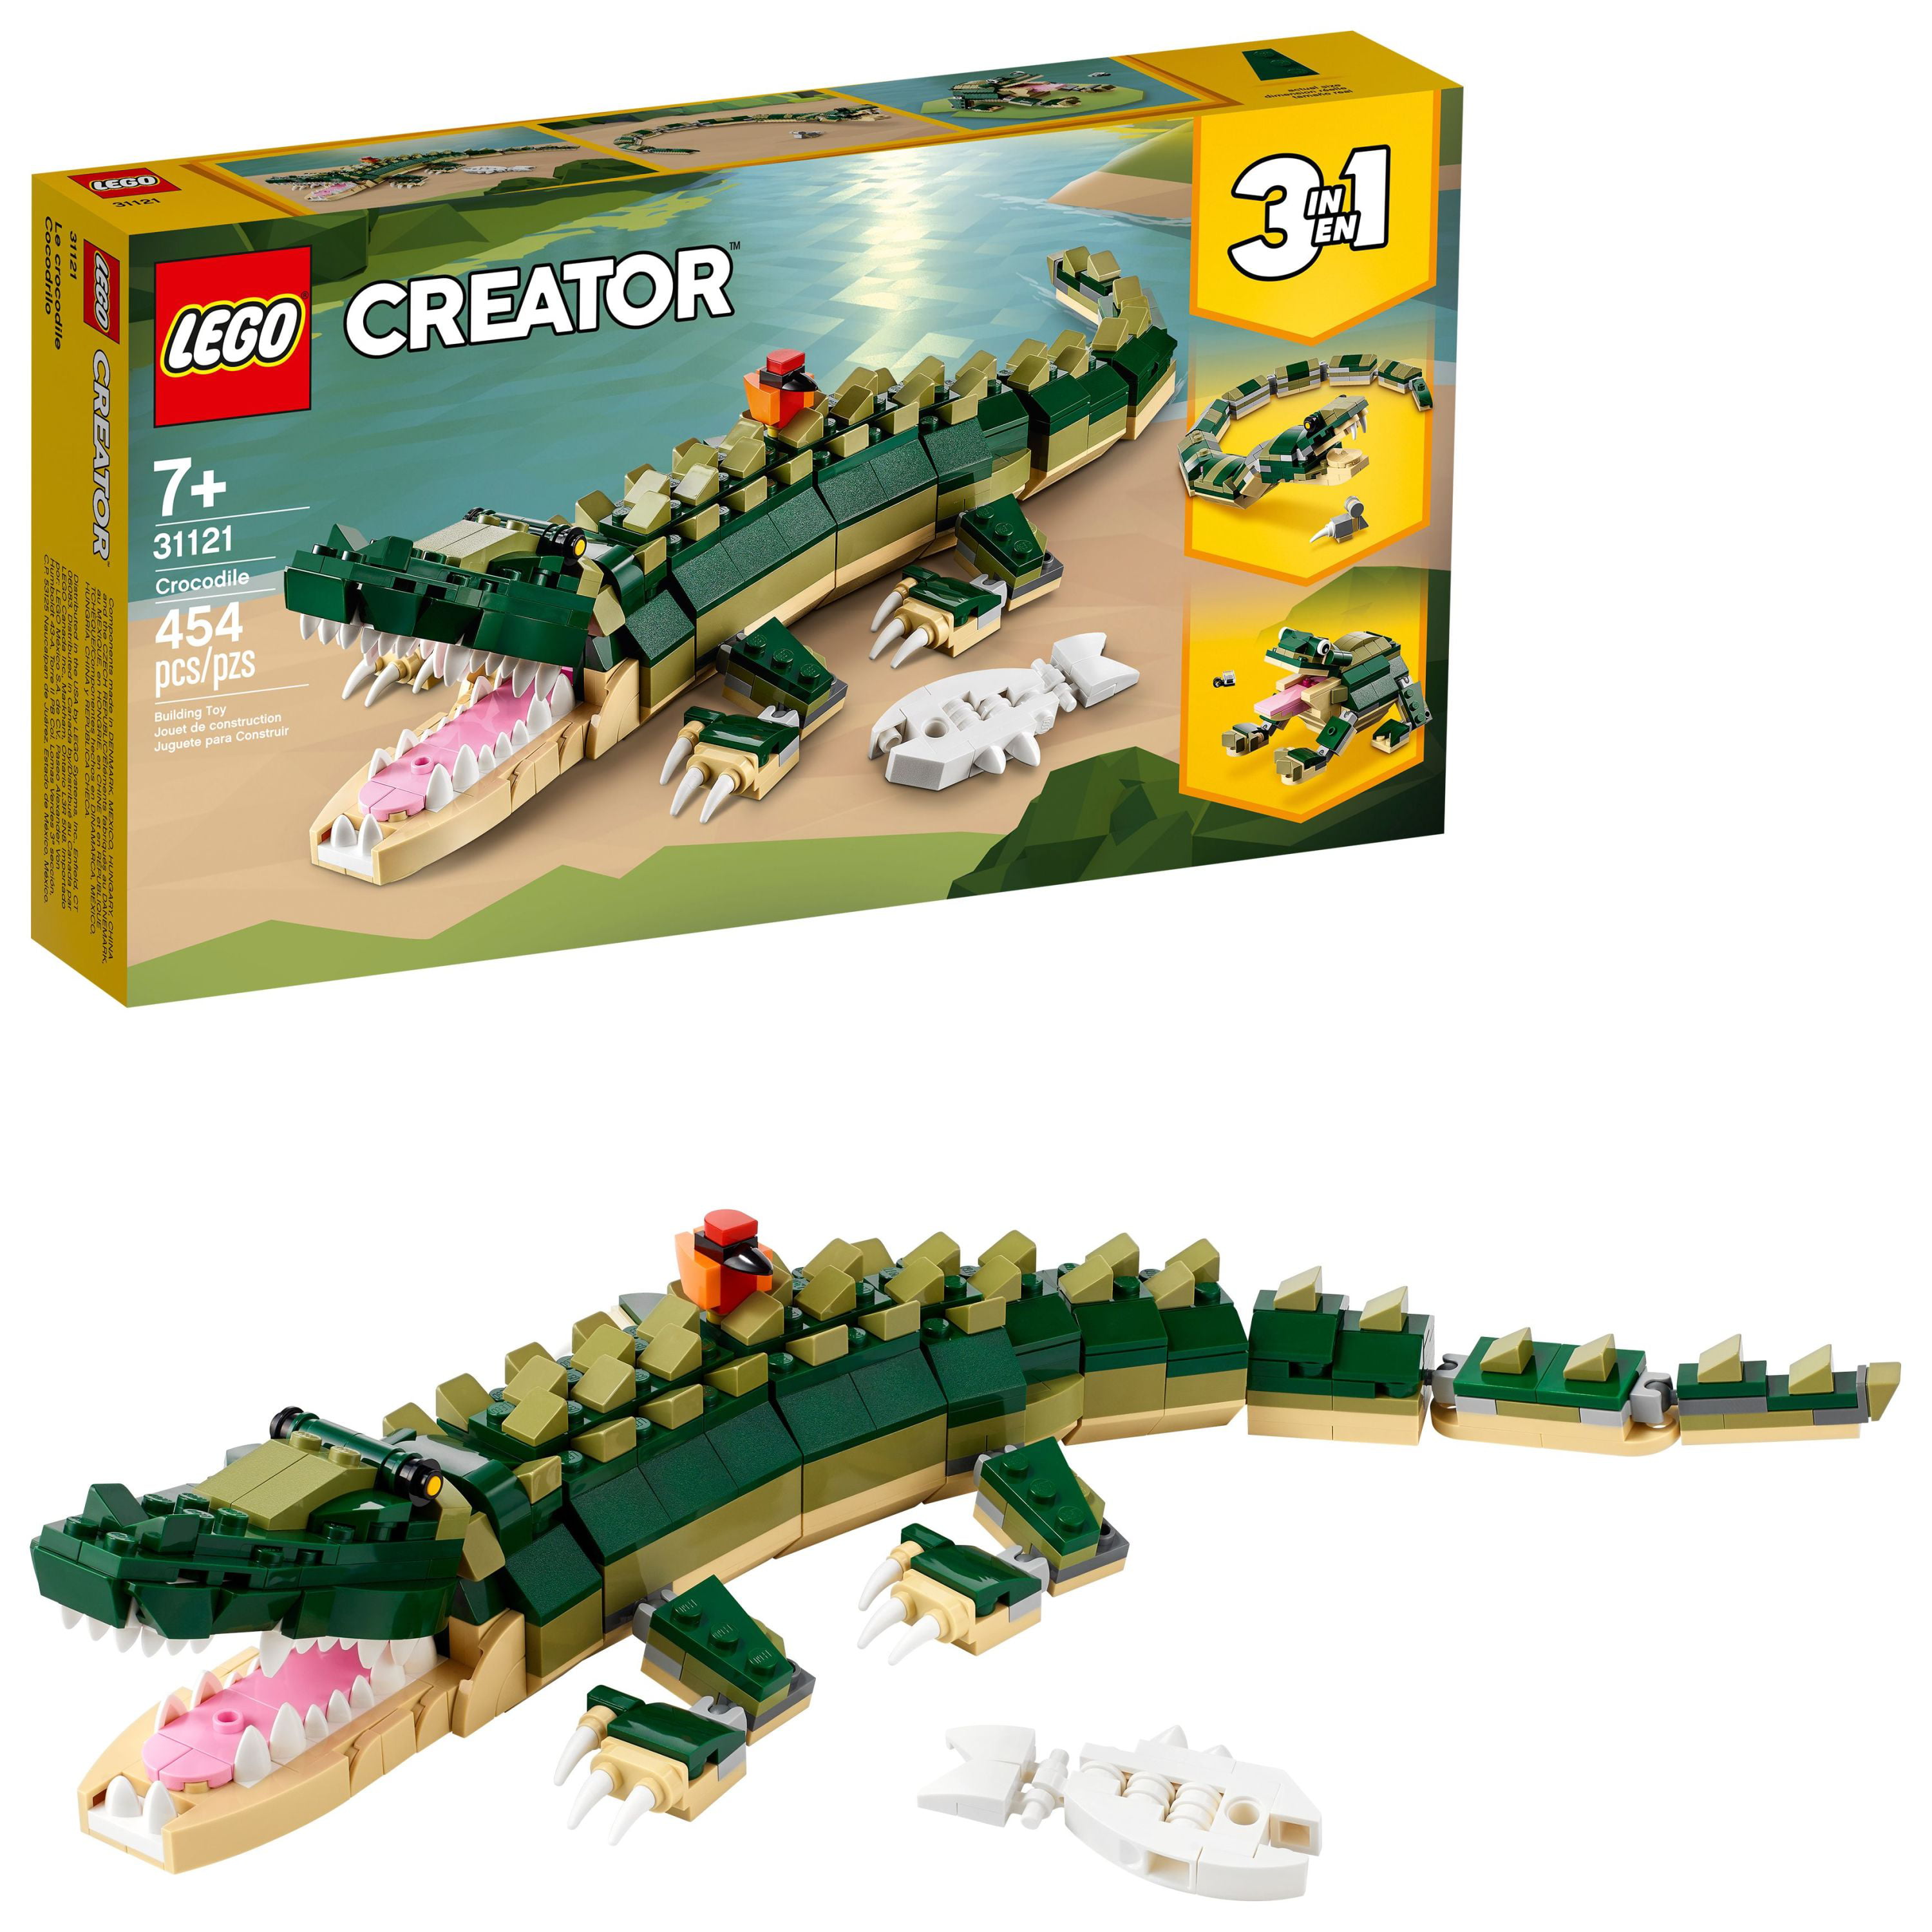 Creator 3in1 Crocodile 31121 Building Toy Featuring Animal Toys Pieces) - Walmart.com